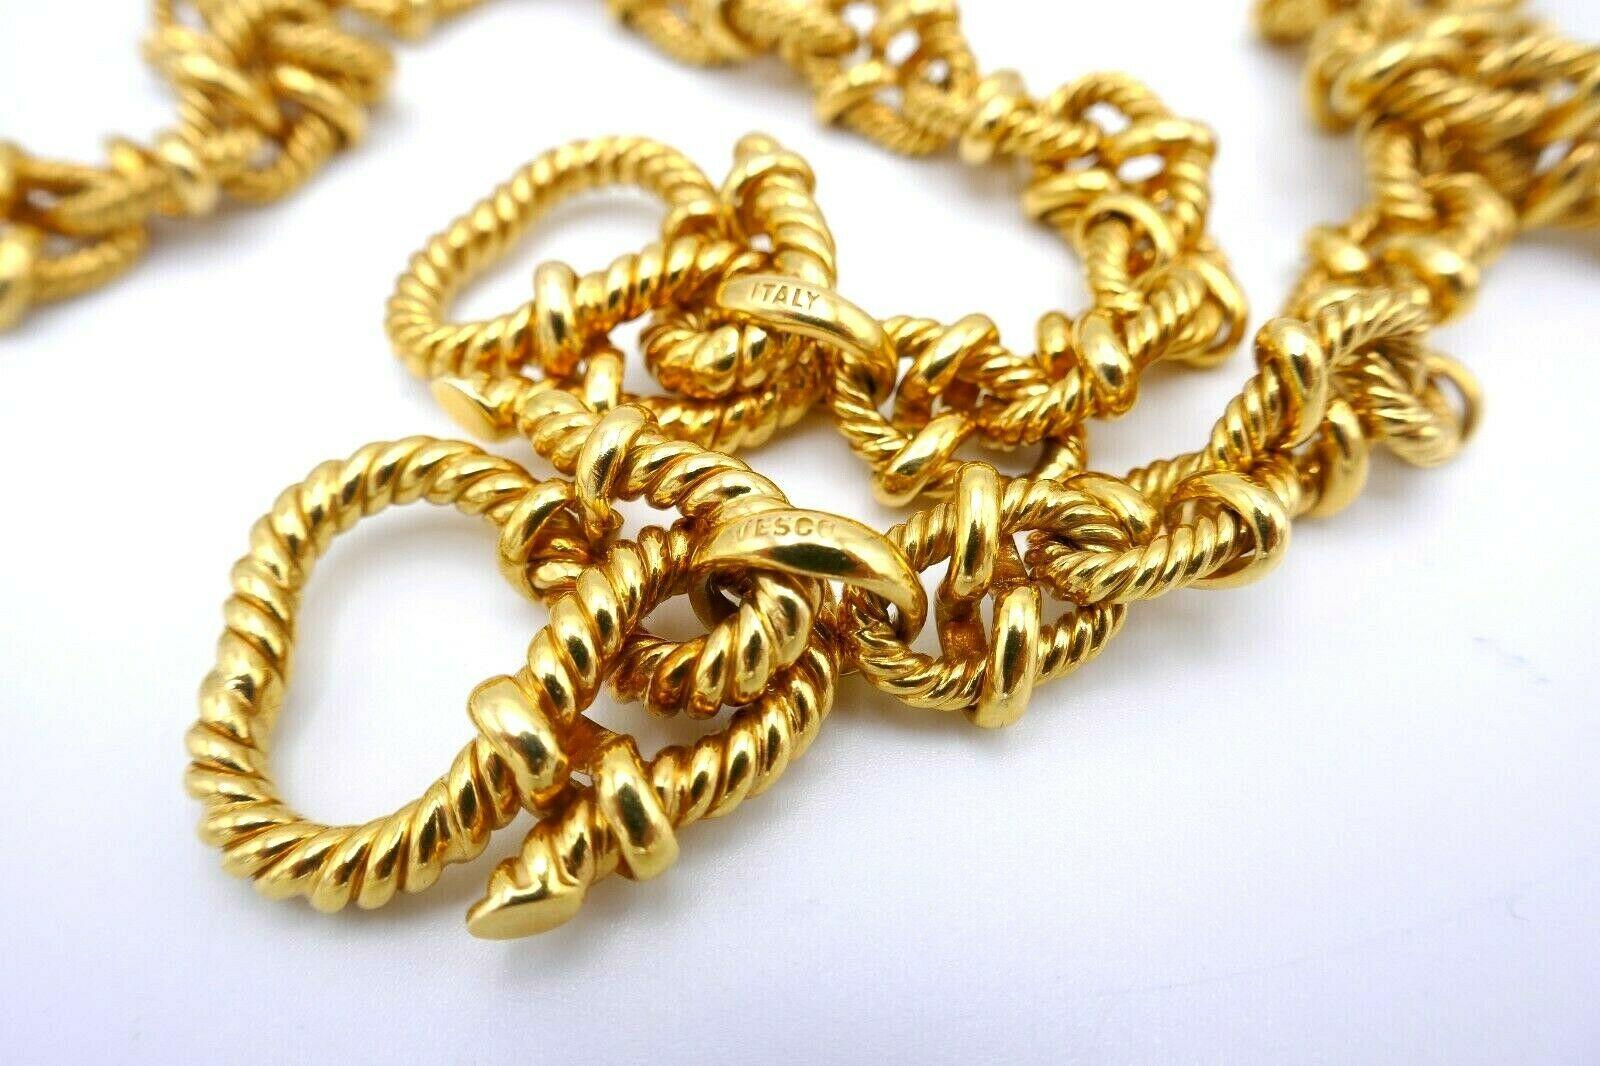 Vesco Italy Yellow Gold Rope Chain Necklace Bracelet Set 4